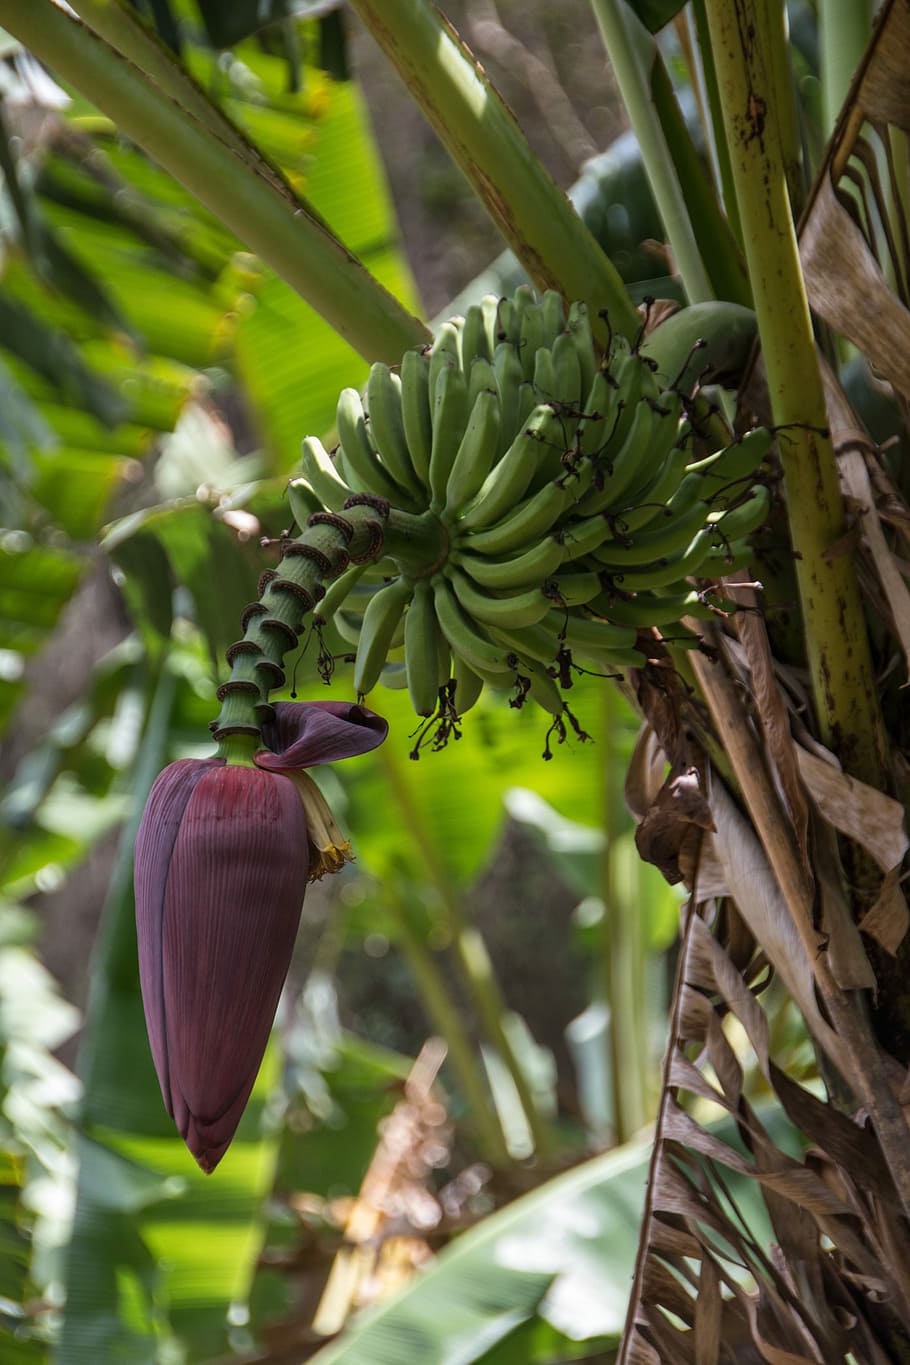 Cuba, Bananas, Banana Flower, banana shrub, fruit green, banana plantation, tropics, fruit, banana plant, food and drink